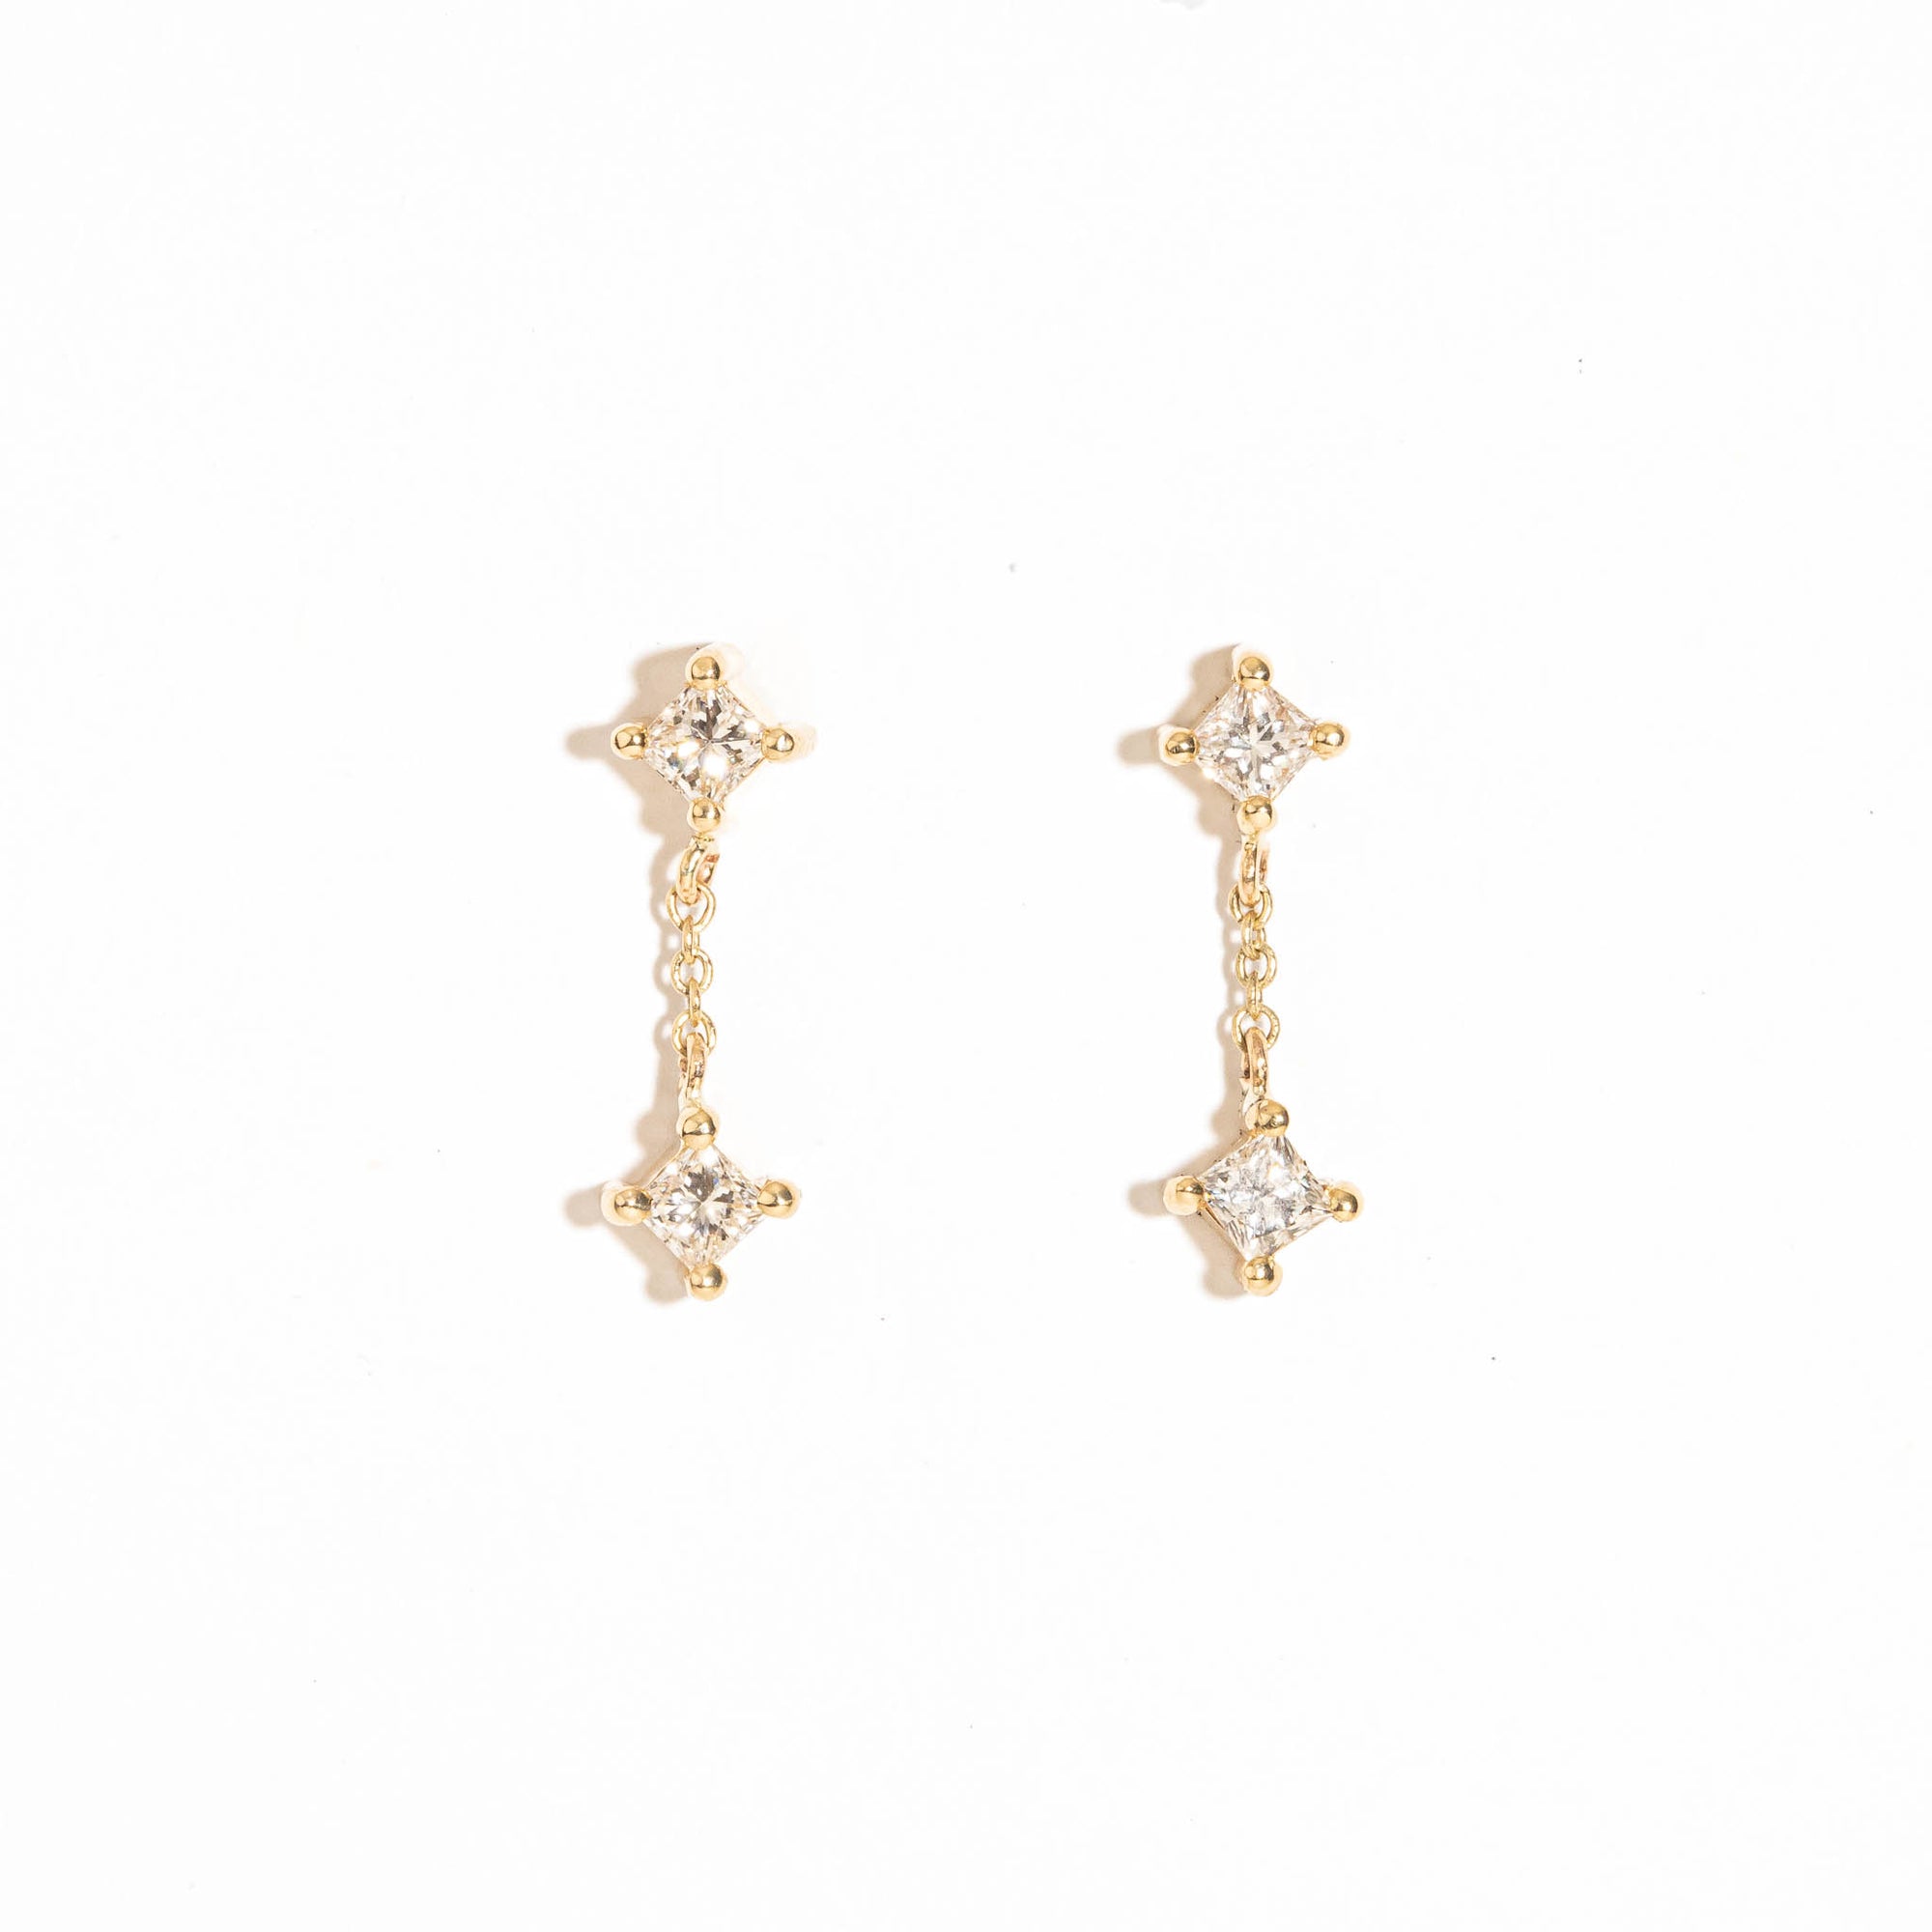 Princess Cut Diamond Drop Earrings with 9 Carat Yellow Gold Chain